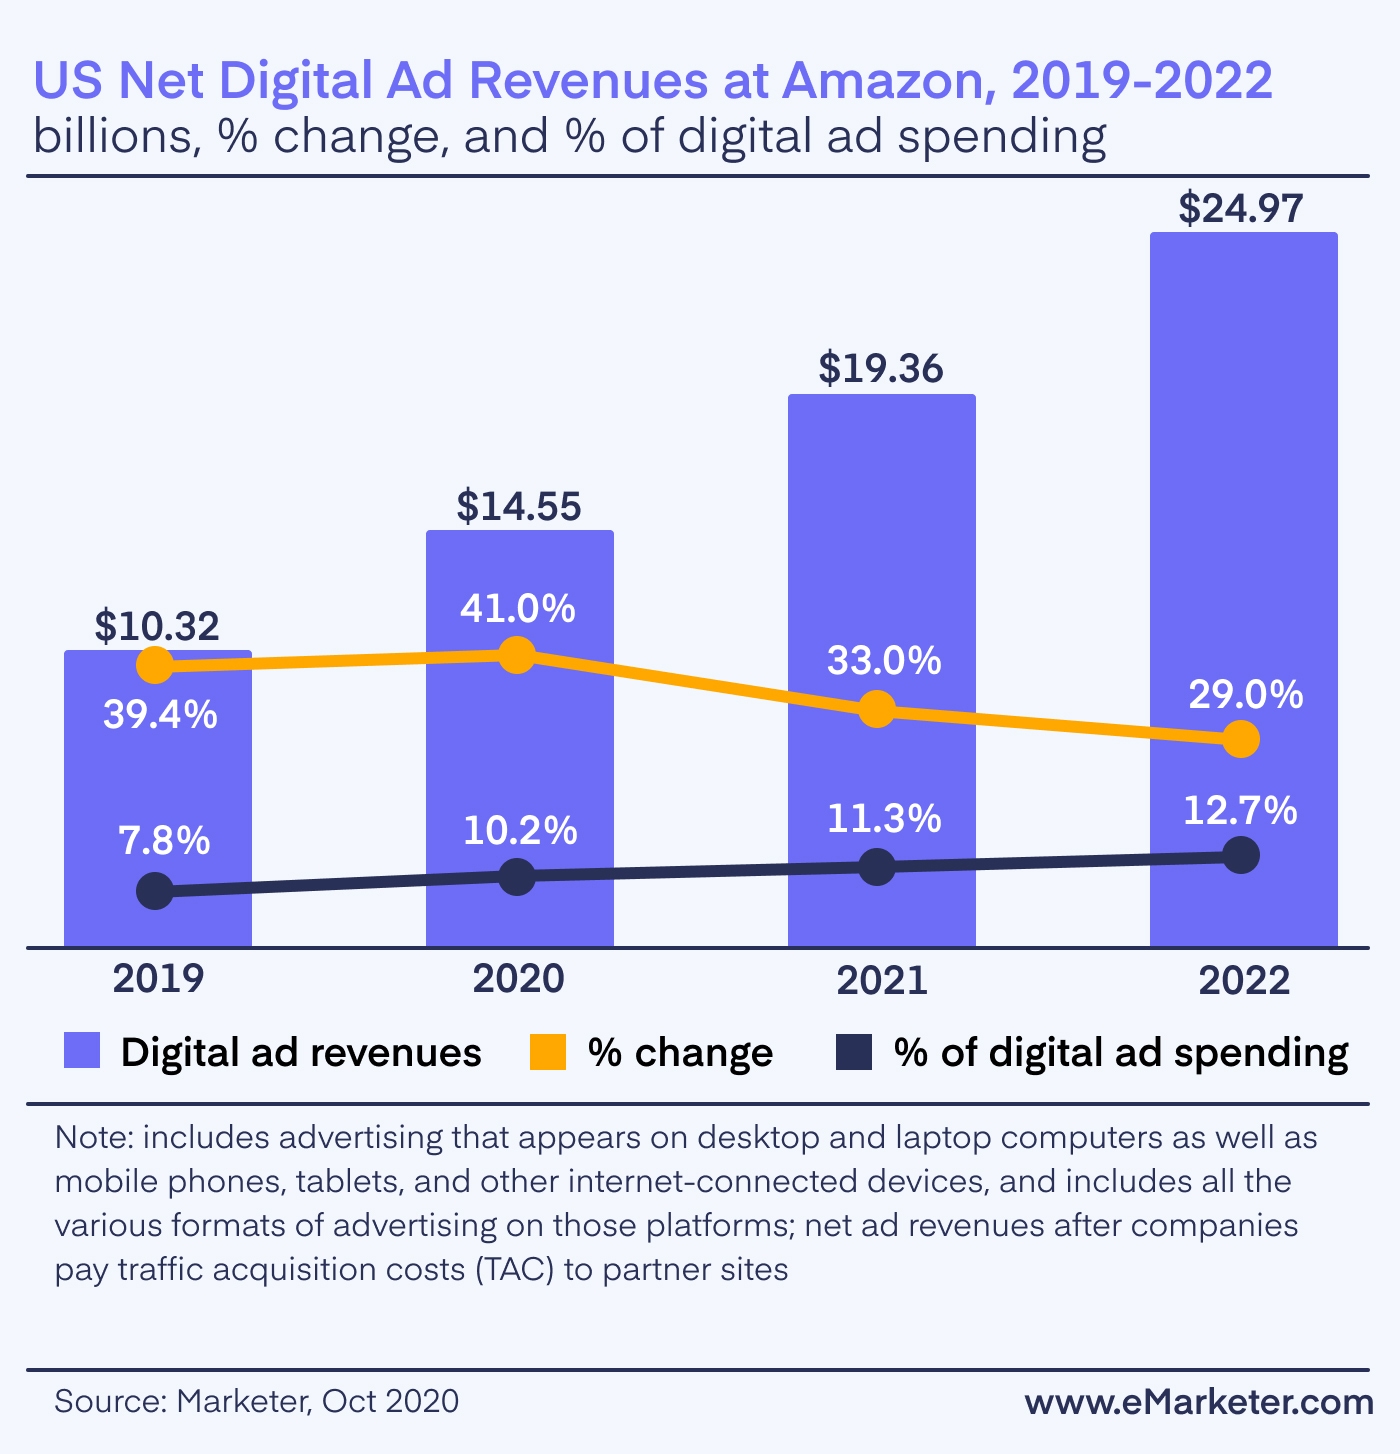 US Net Digital Ad Revenues at Amazon (2019-2022)